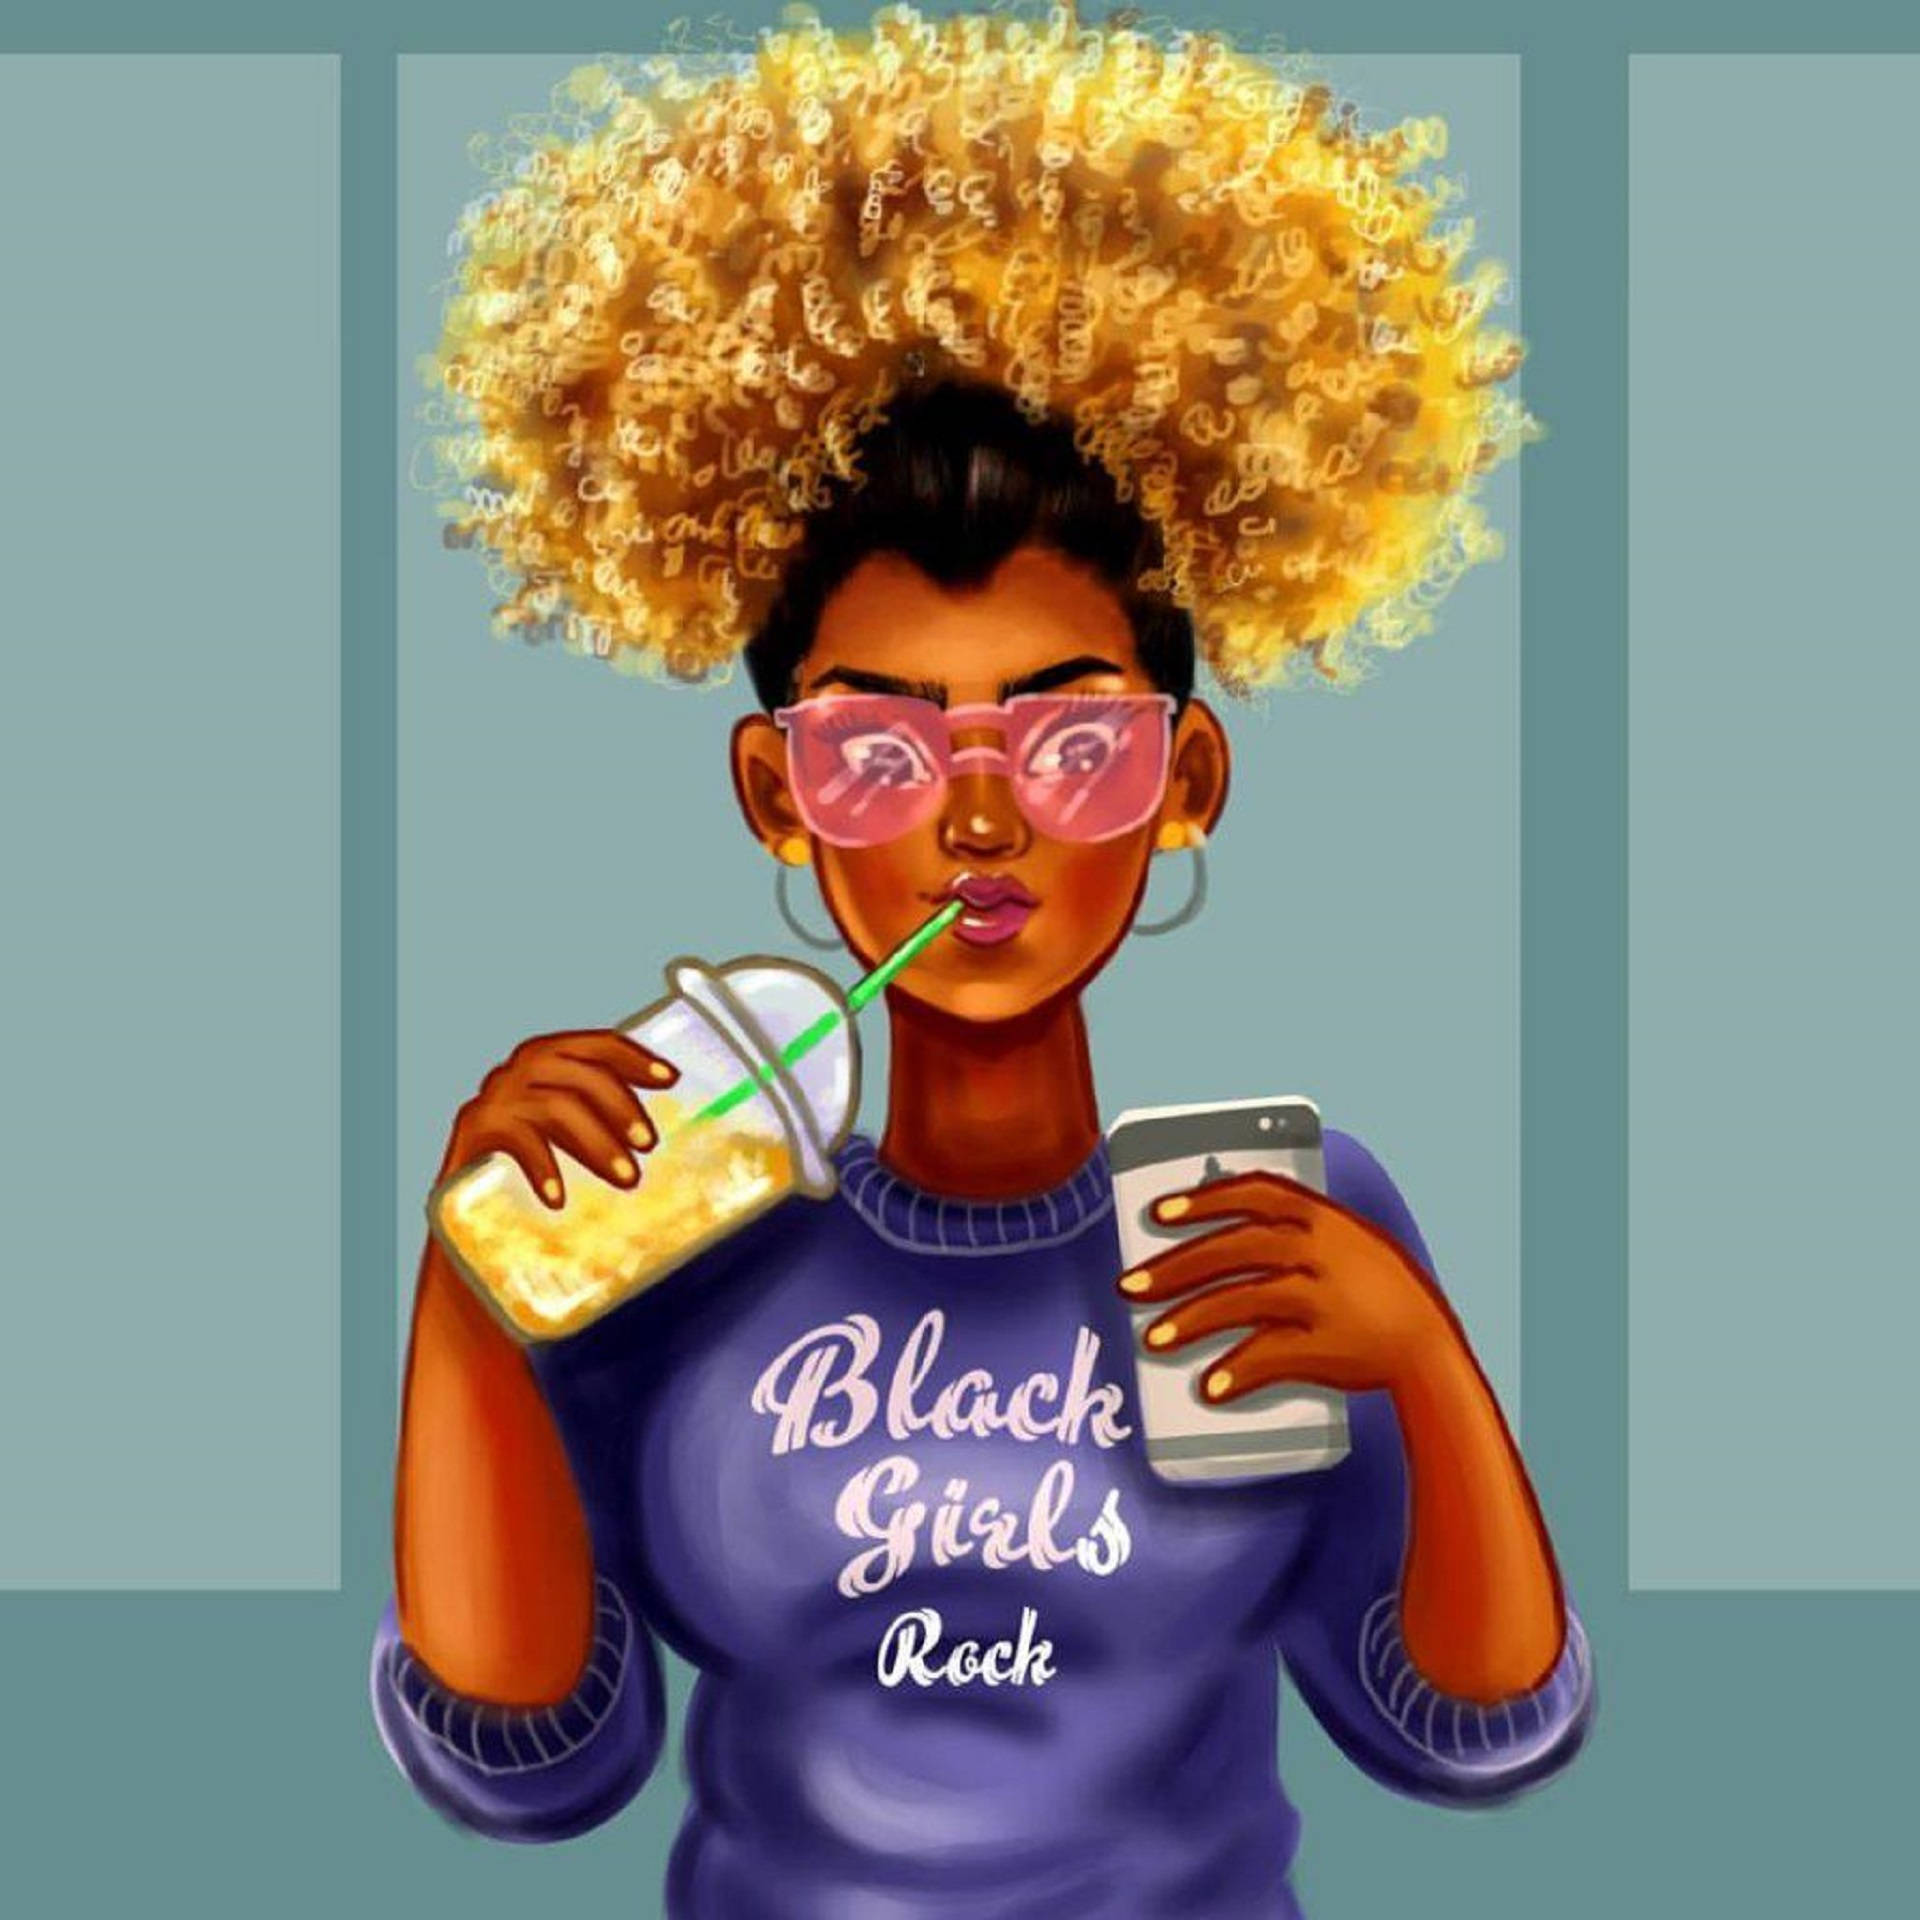 Cute Black Girls Rock Pop Art Picture